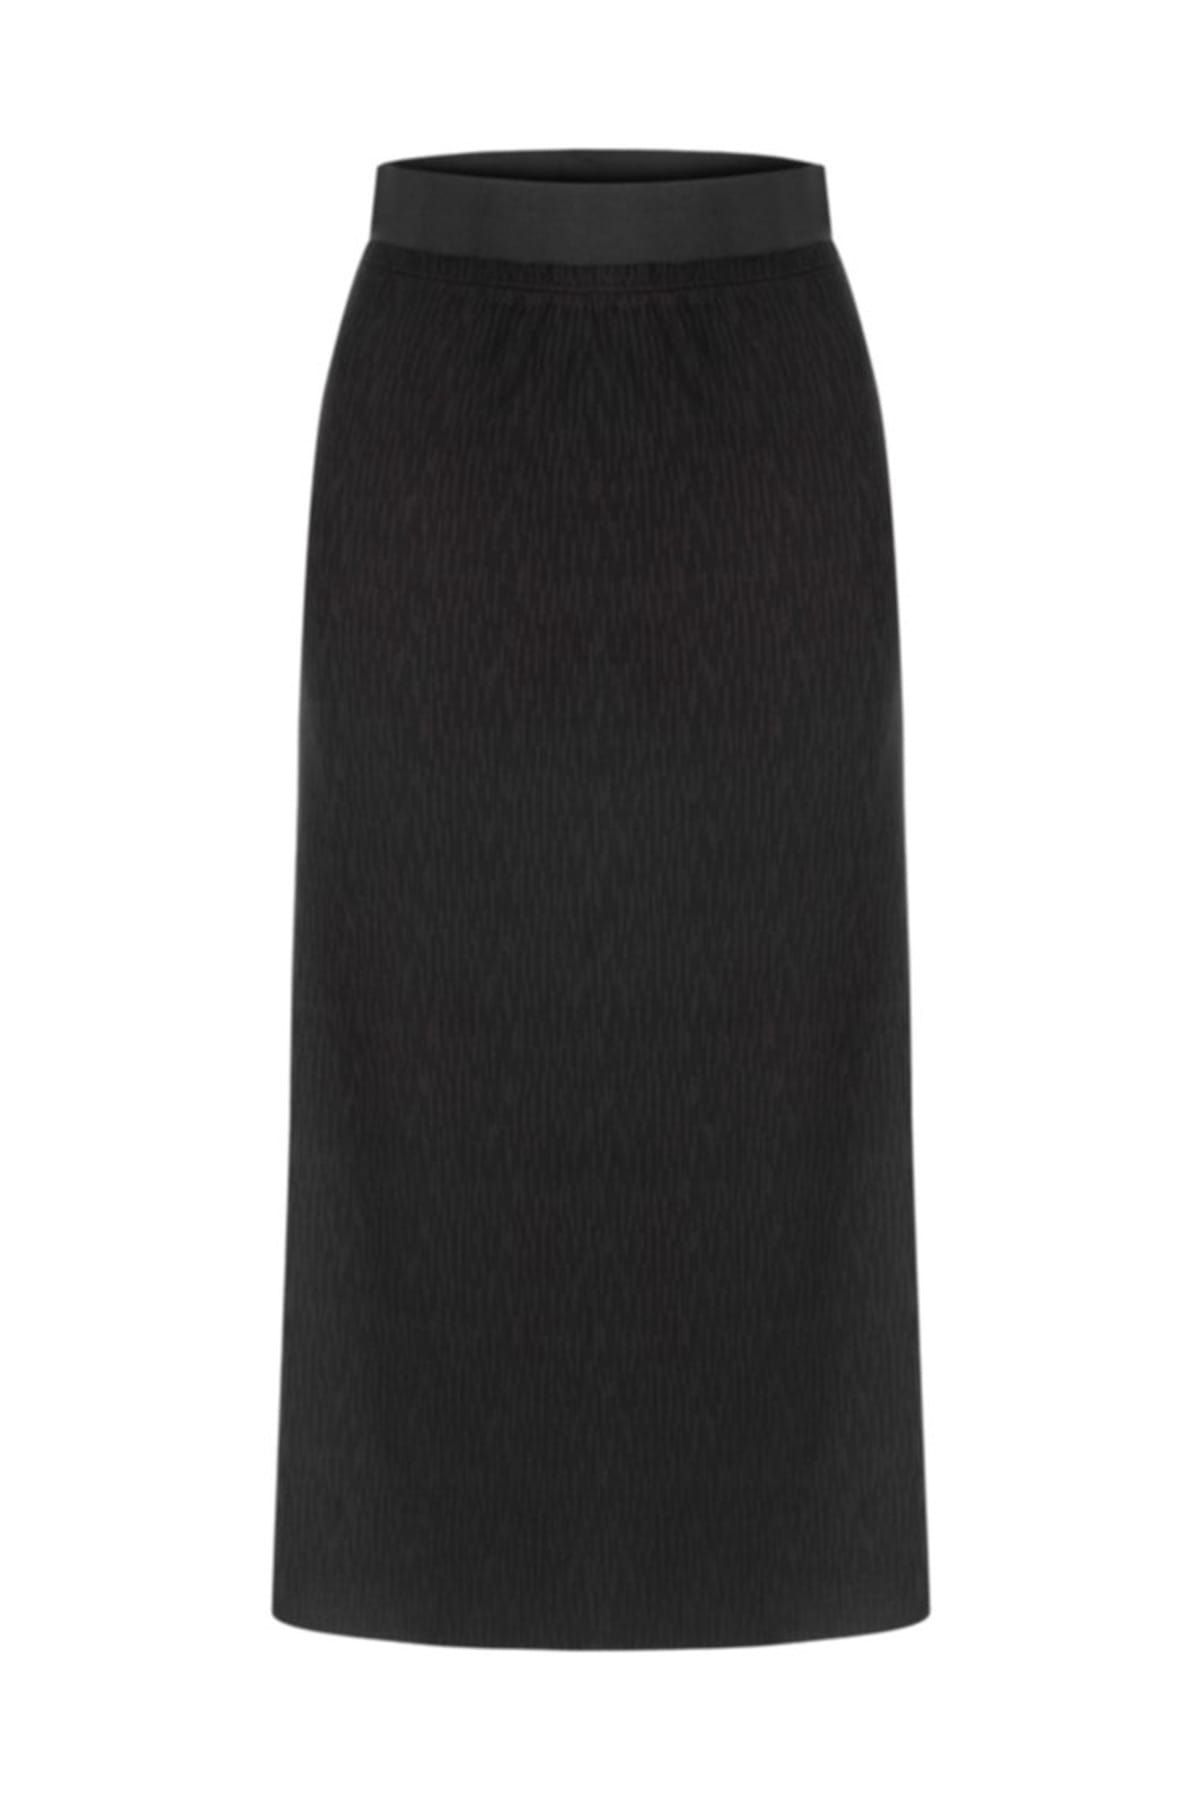 Mudo Kadın Siyah Beli Lastikli Midi Boy Elbise 1204591